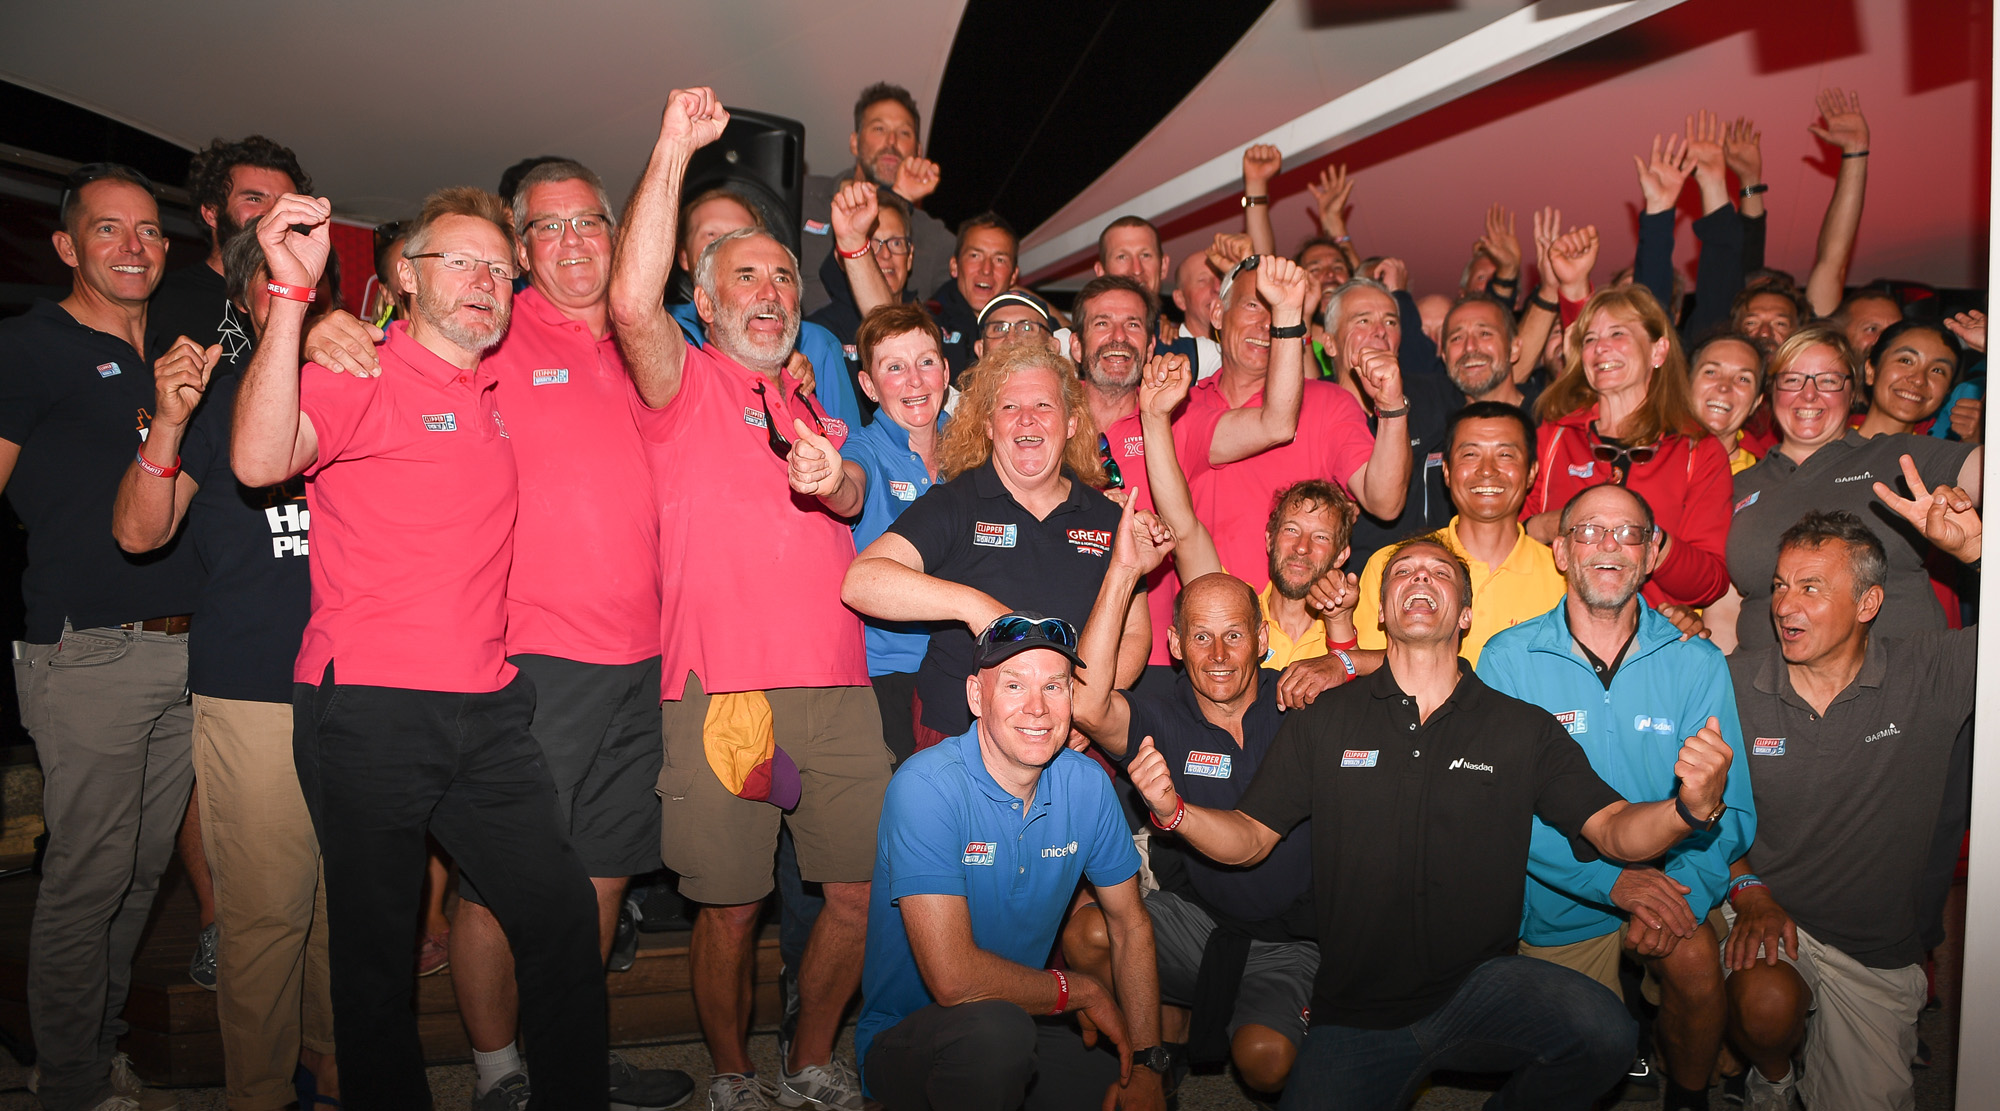 Crew showing social spirit at Fremantle stopover